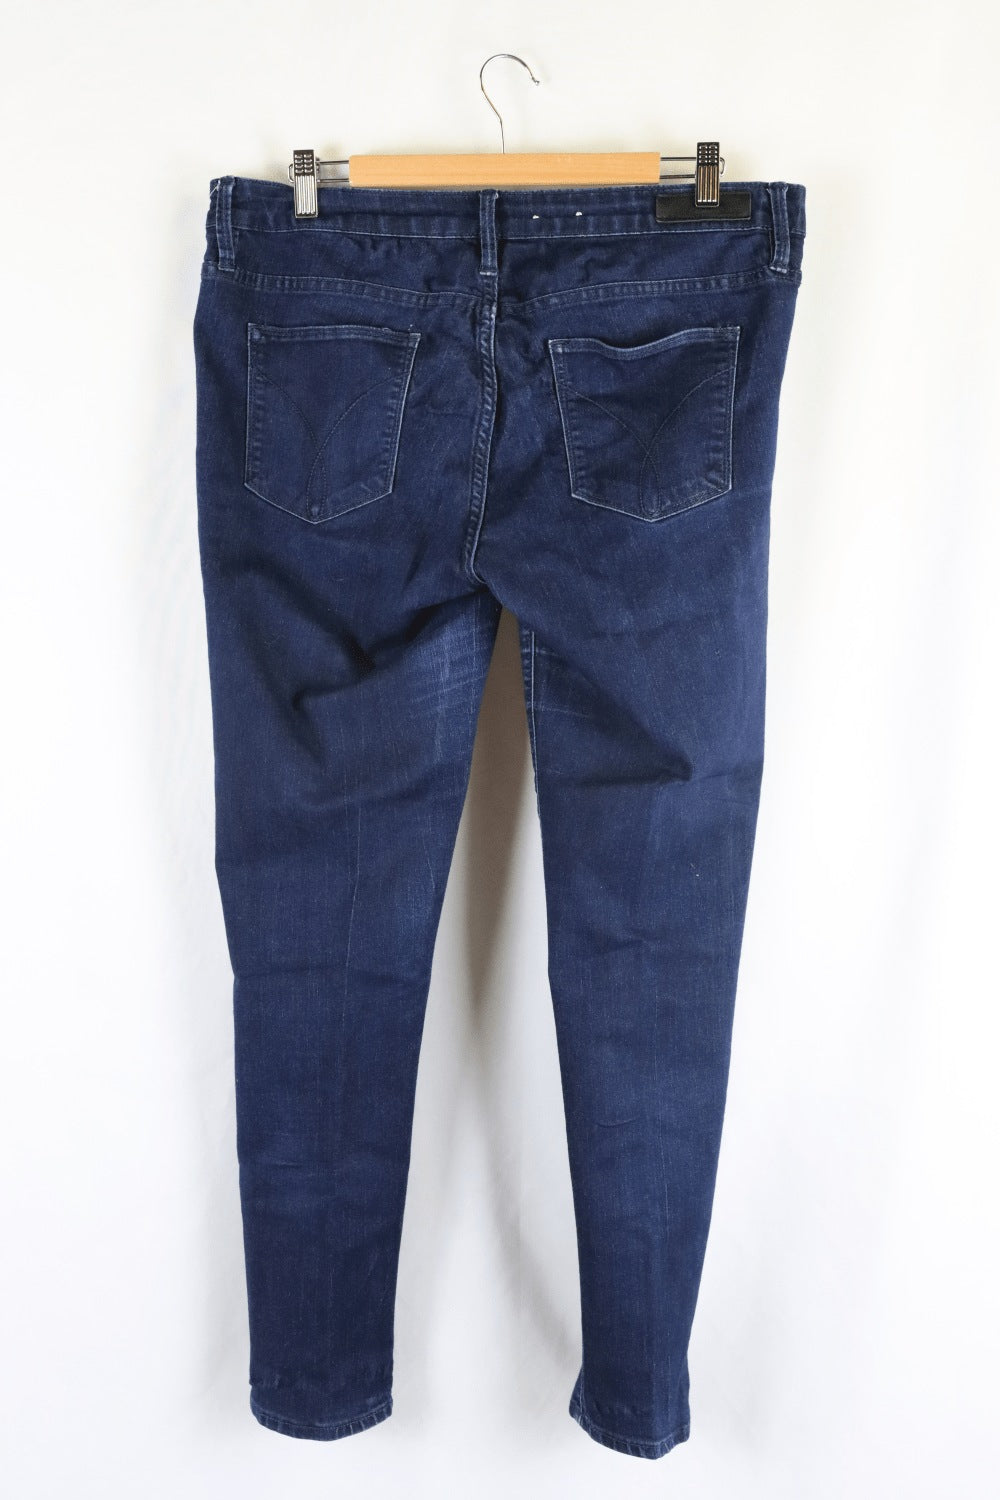 Calvin Klein Blue Jeans 16